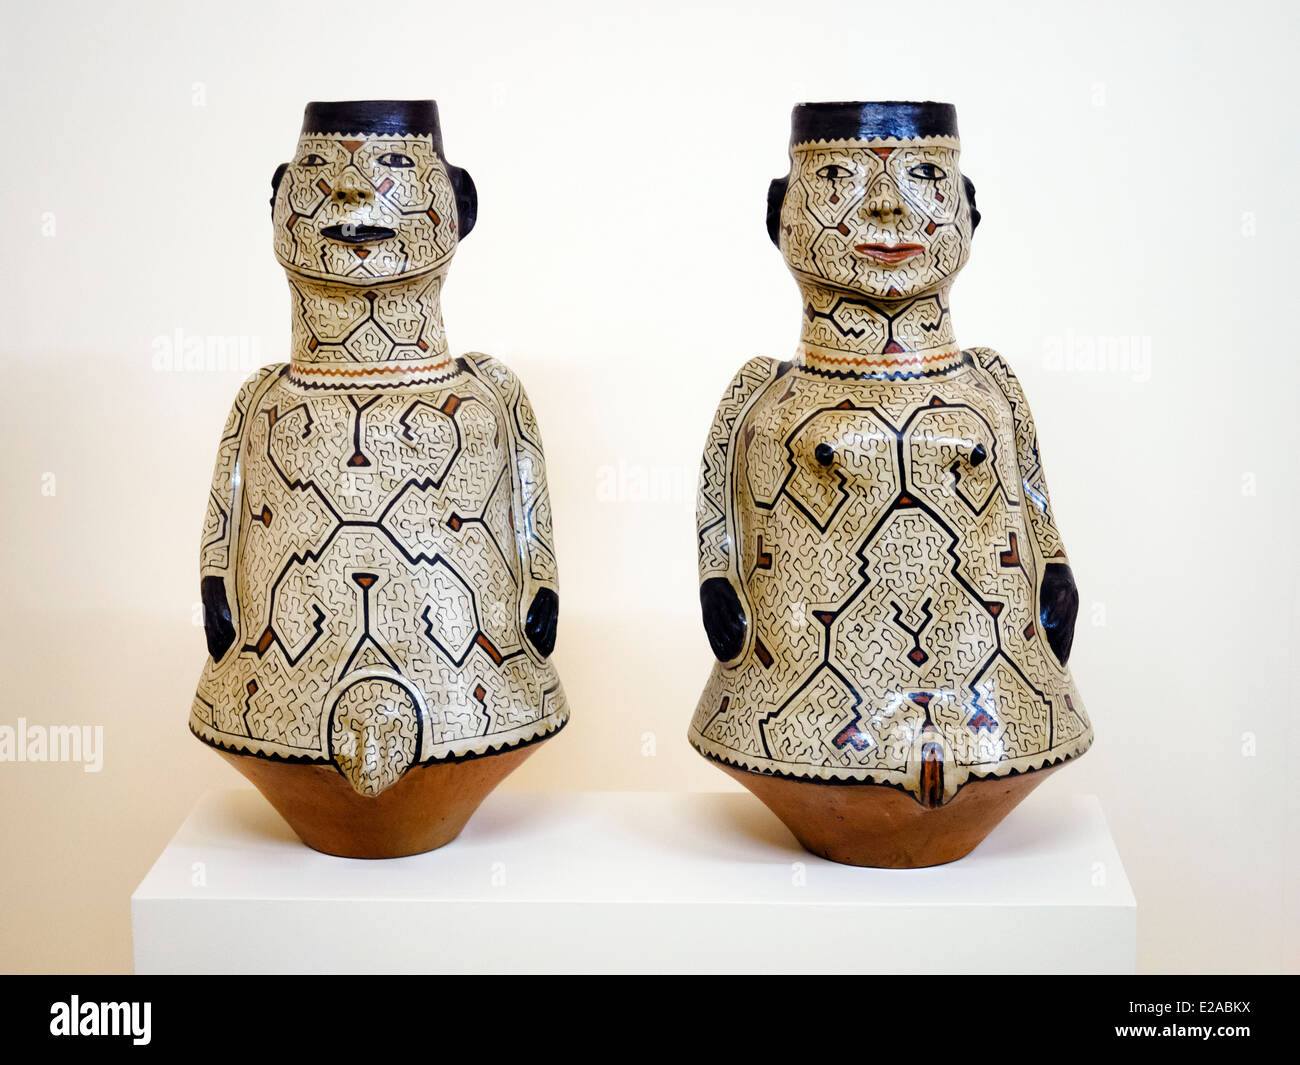 Amazon pottery -Fotos und -Bildmaterial in hoher Auflösung – Alamy